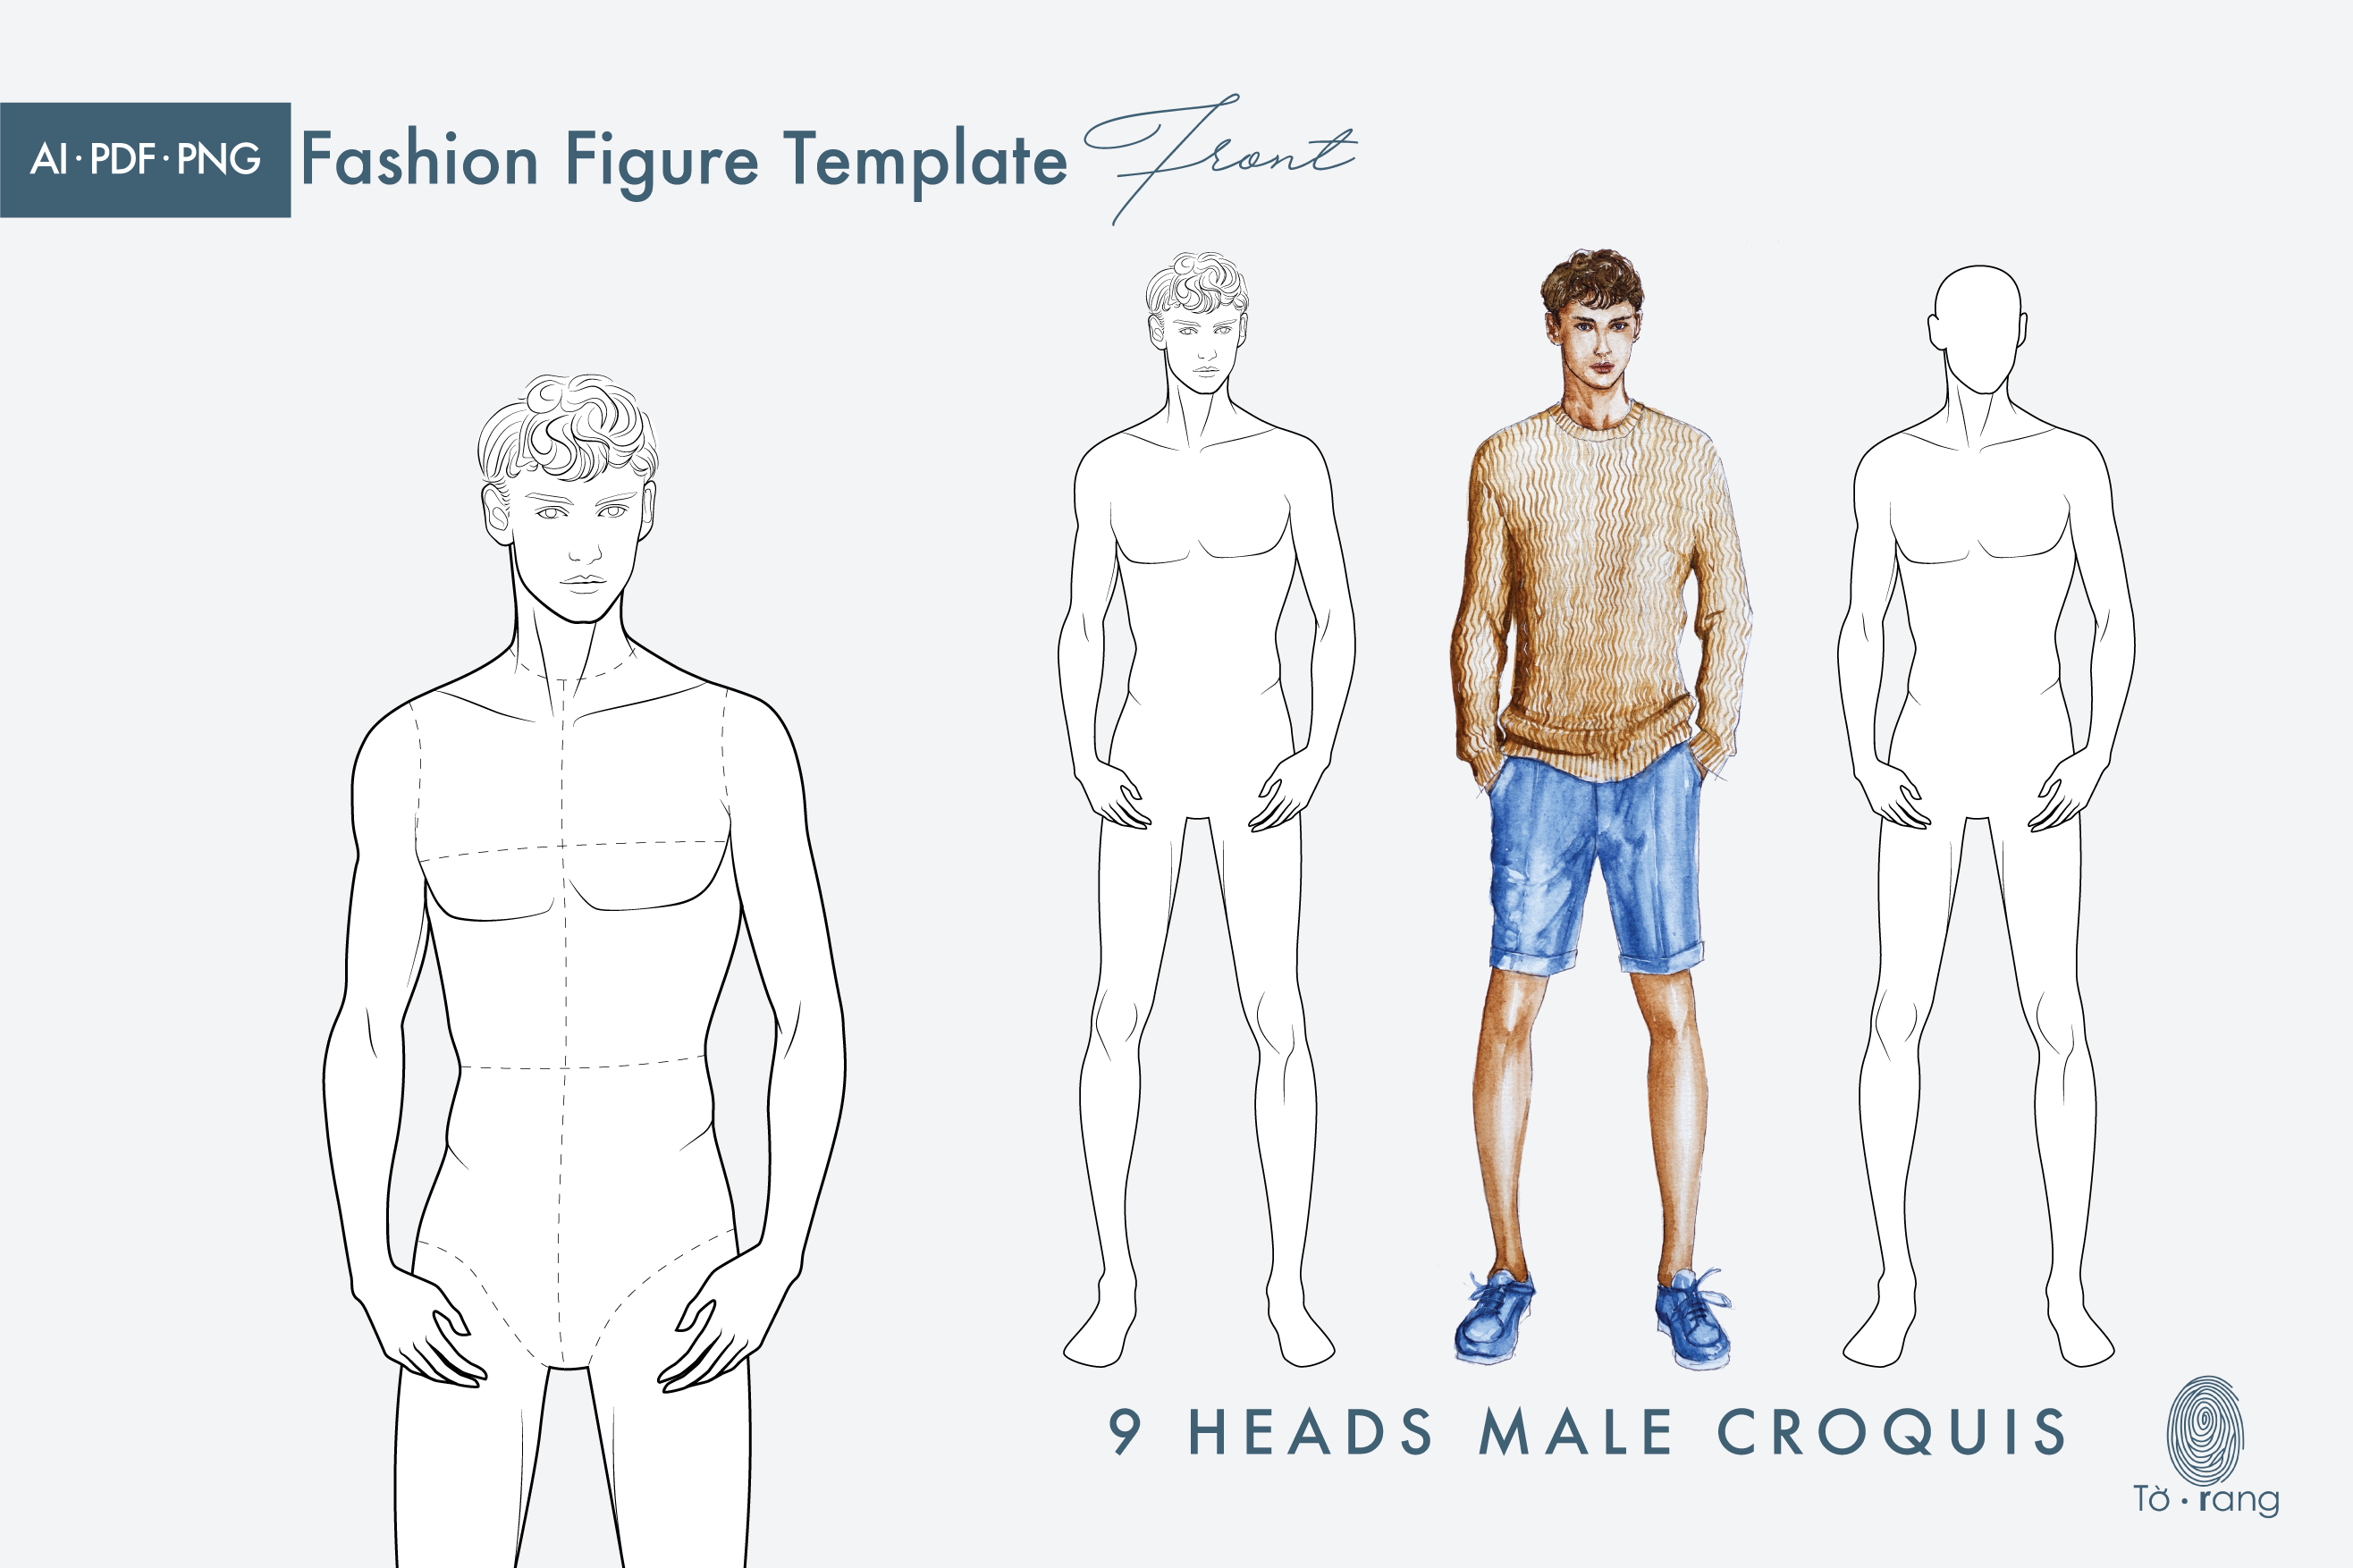 Male Croquis For Fashion Illustration Heads Fashion Figure Template